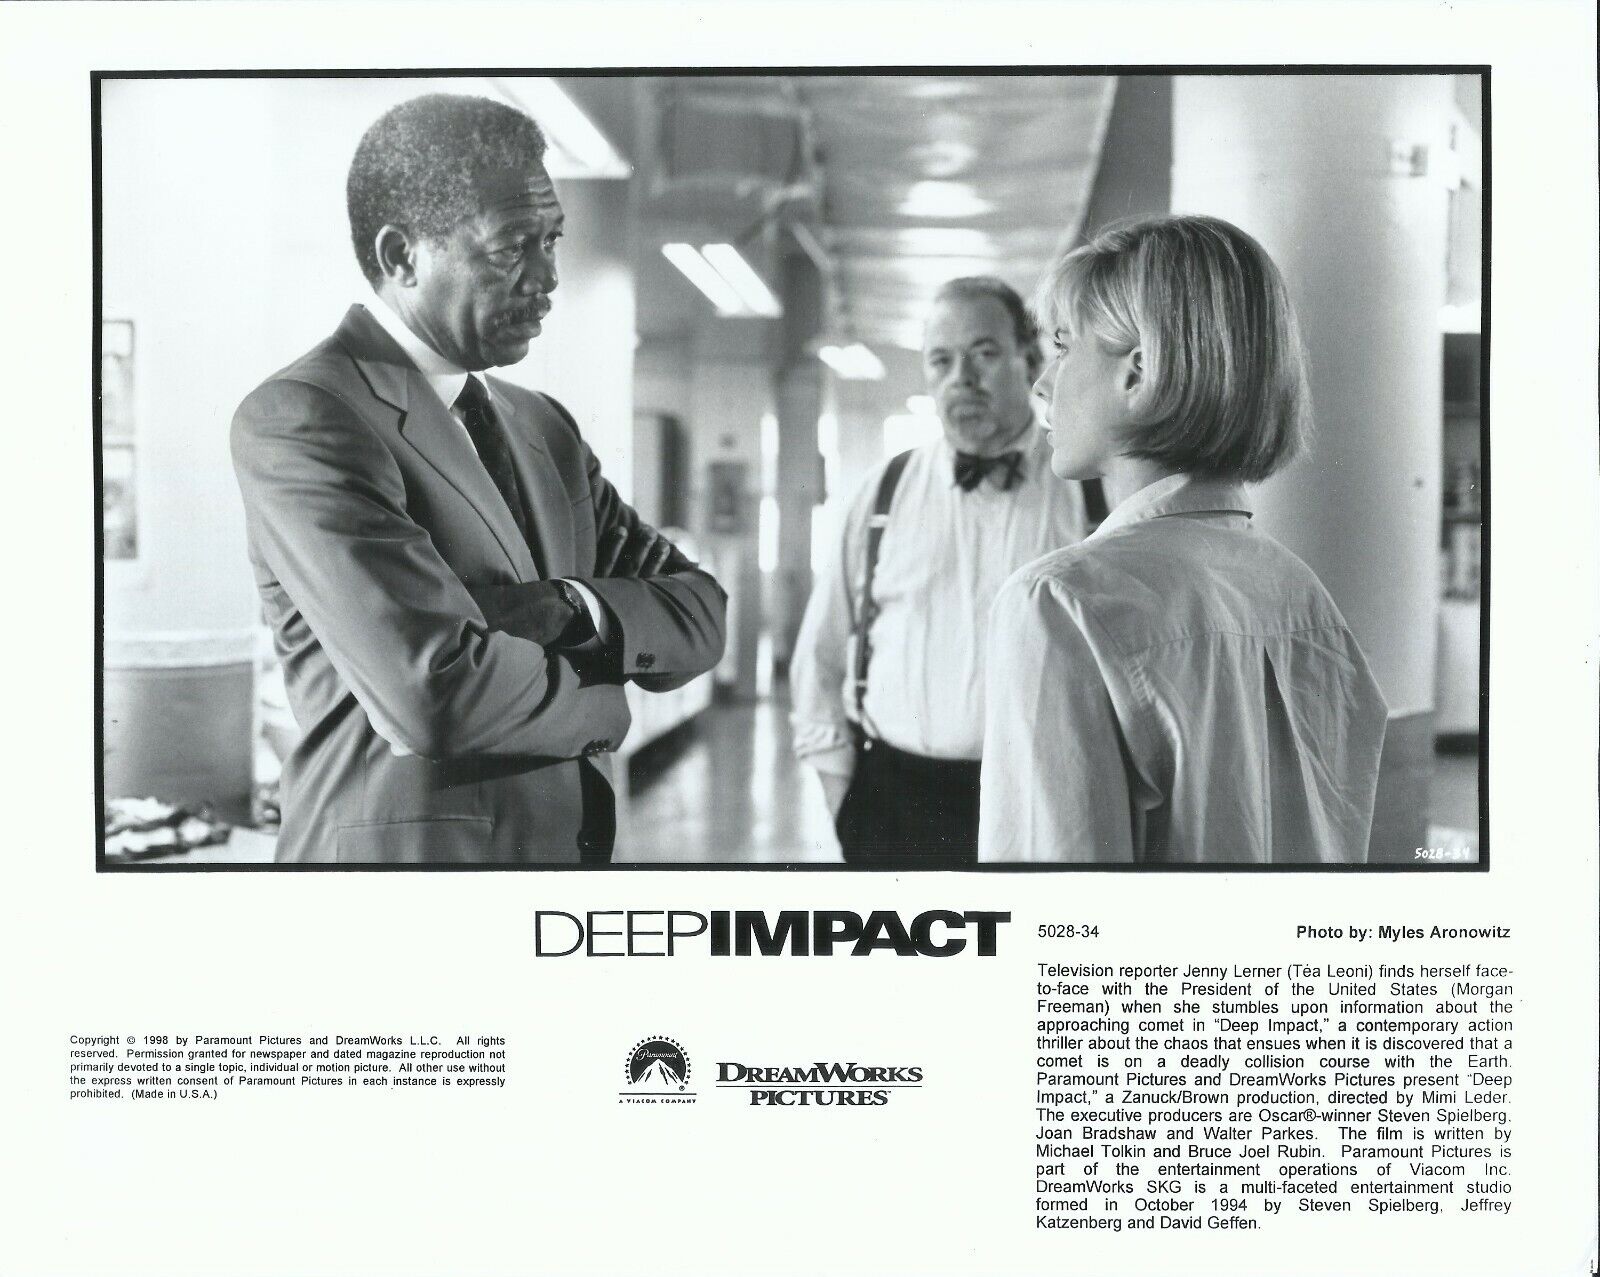 DEEP IMPACT Morgan Freeman & Tea Leoni Original 8x10 Press Photo